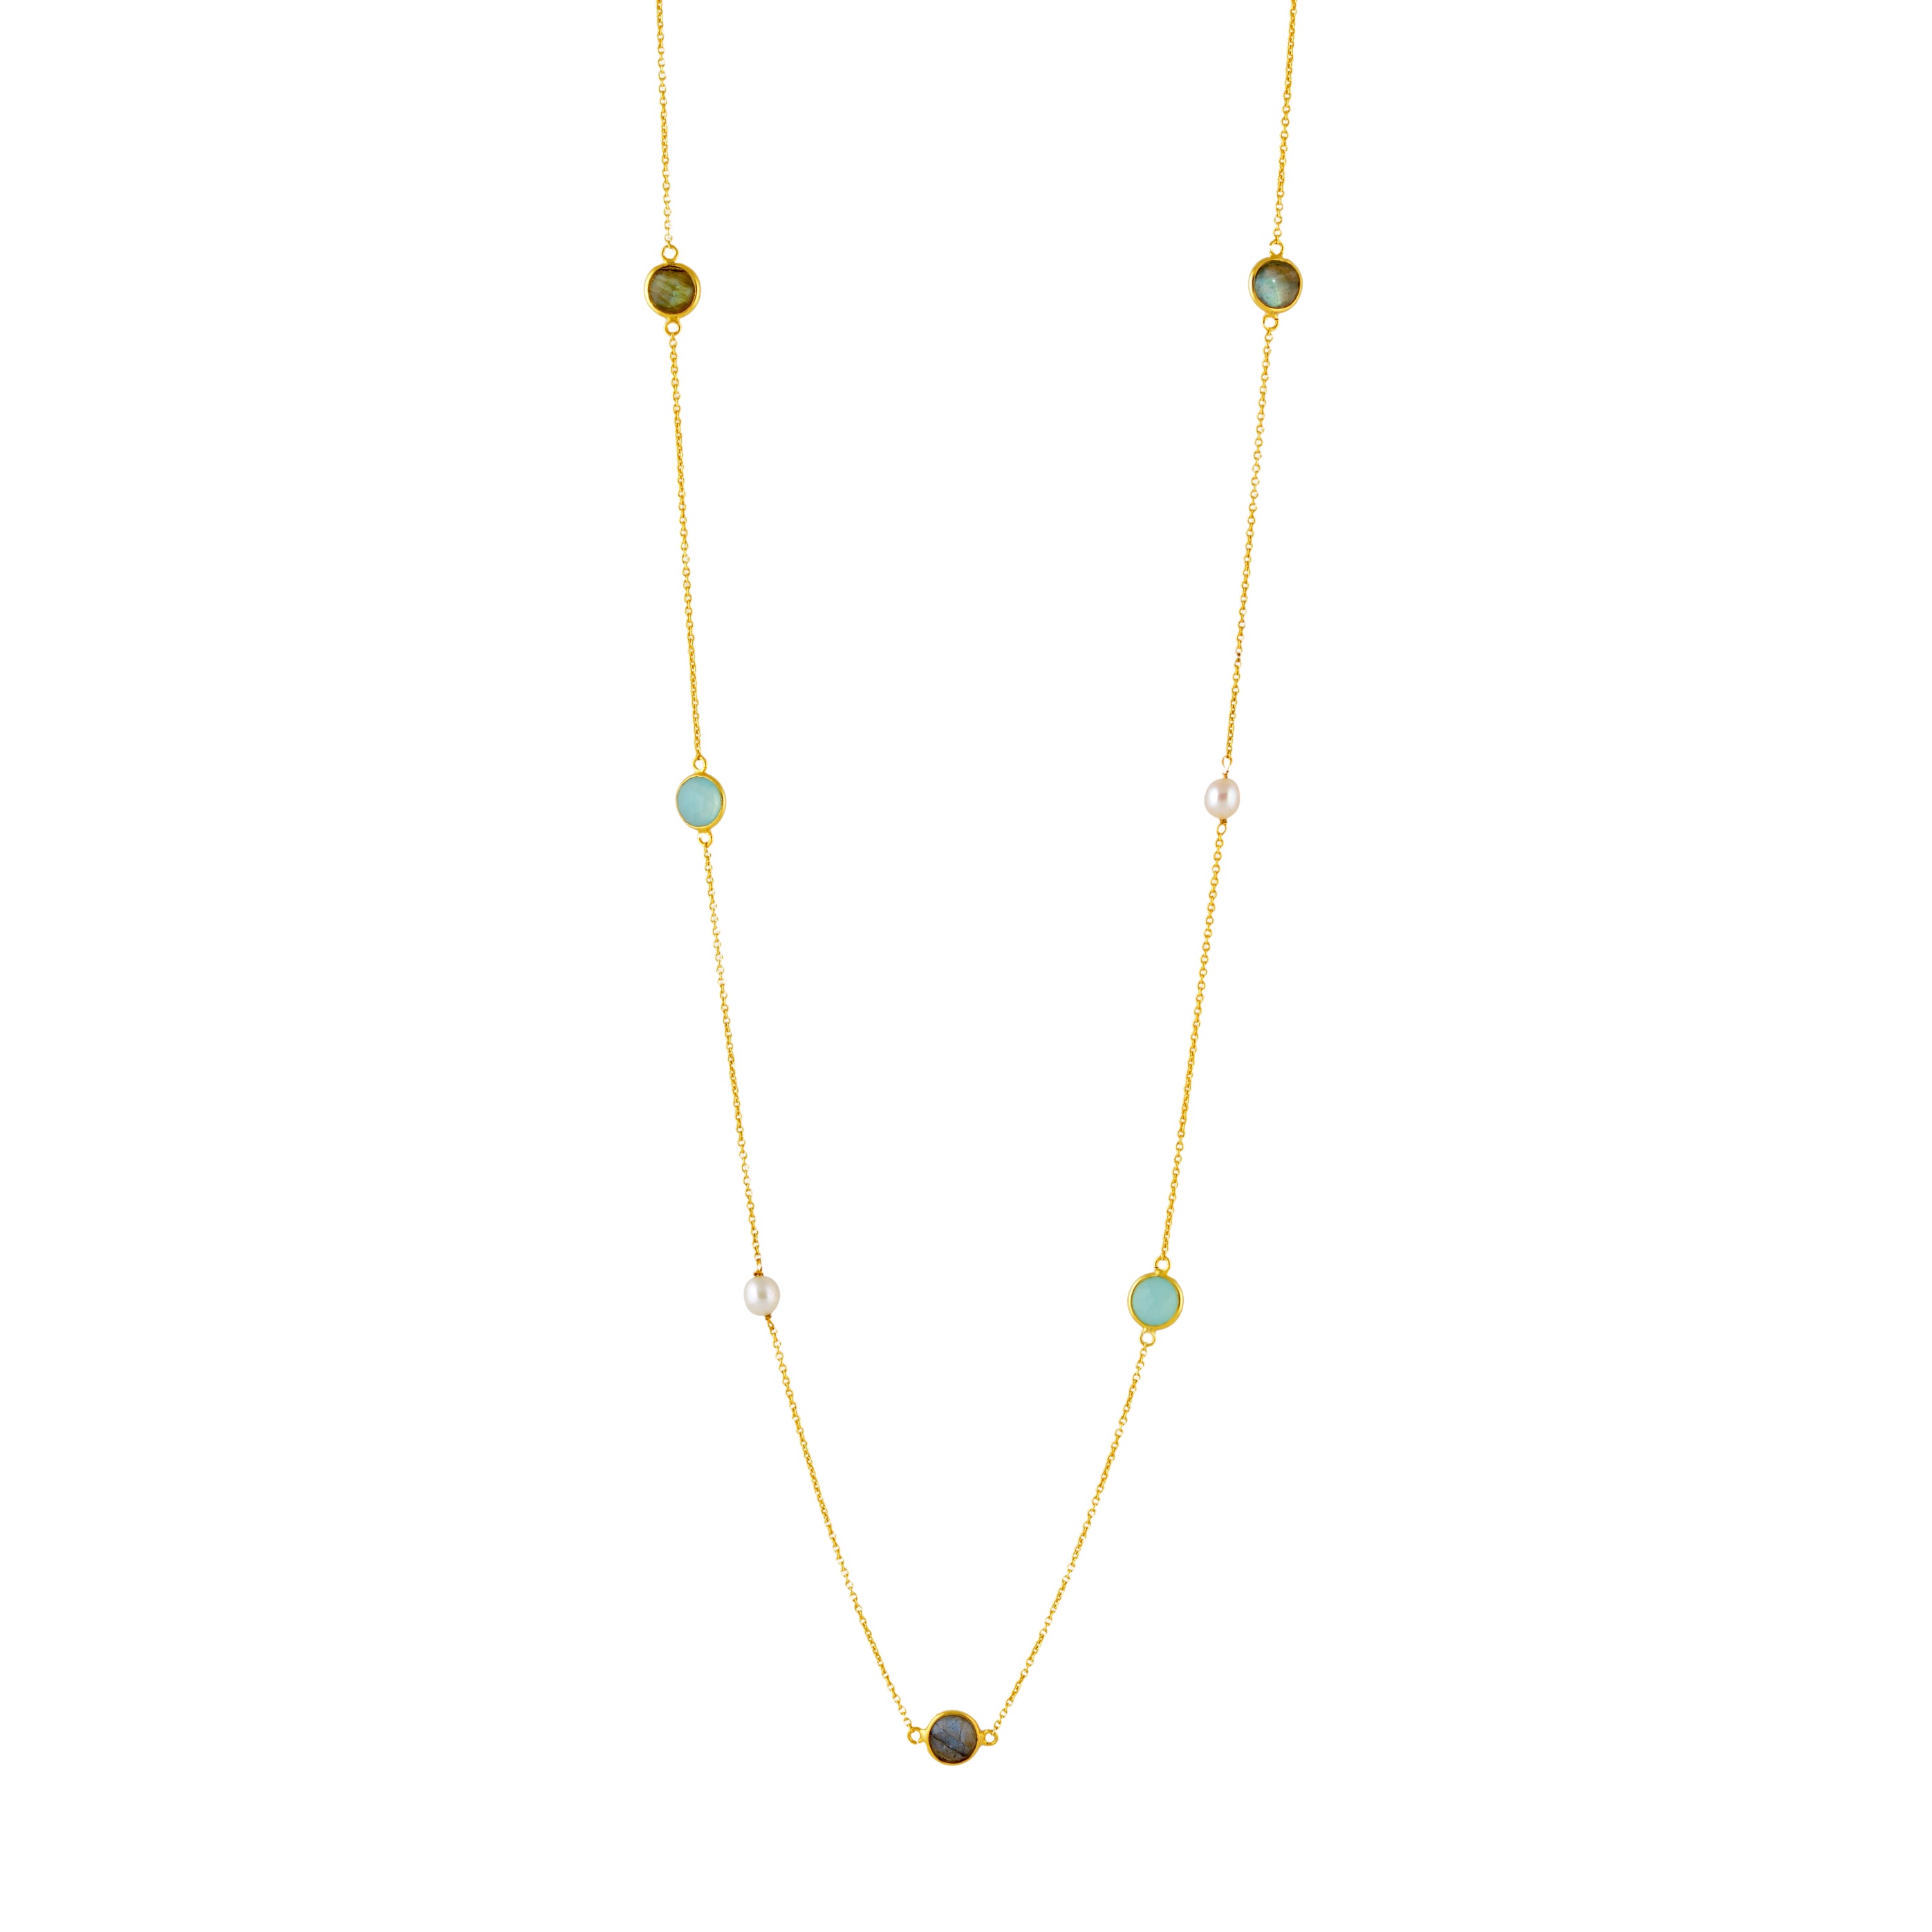 Exquisite Gemstone Gold Chain Necklace